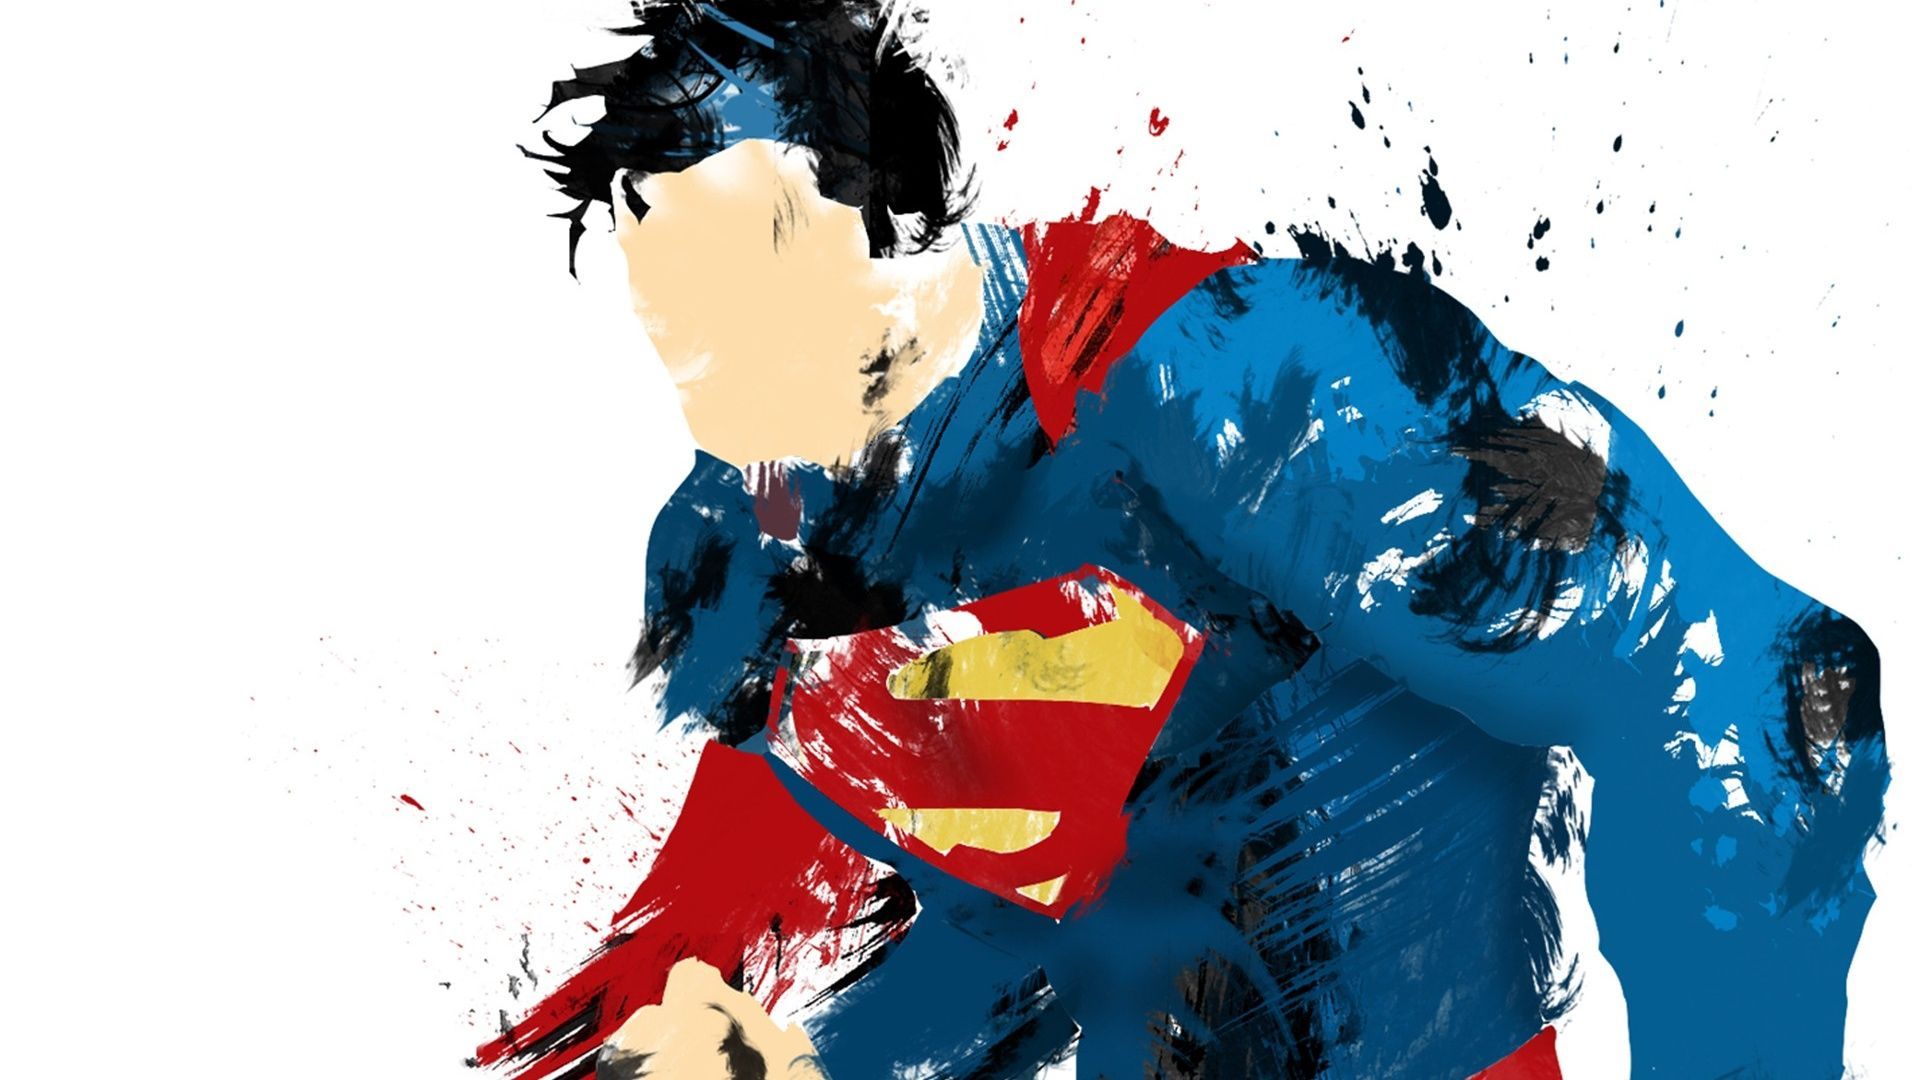 Superman Cartoonic Art Wallpapers